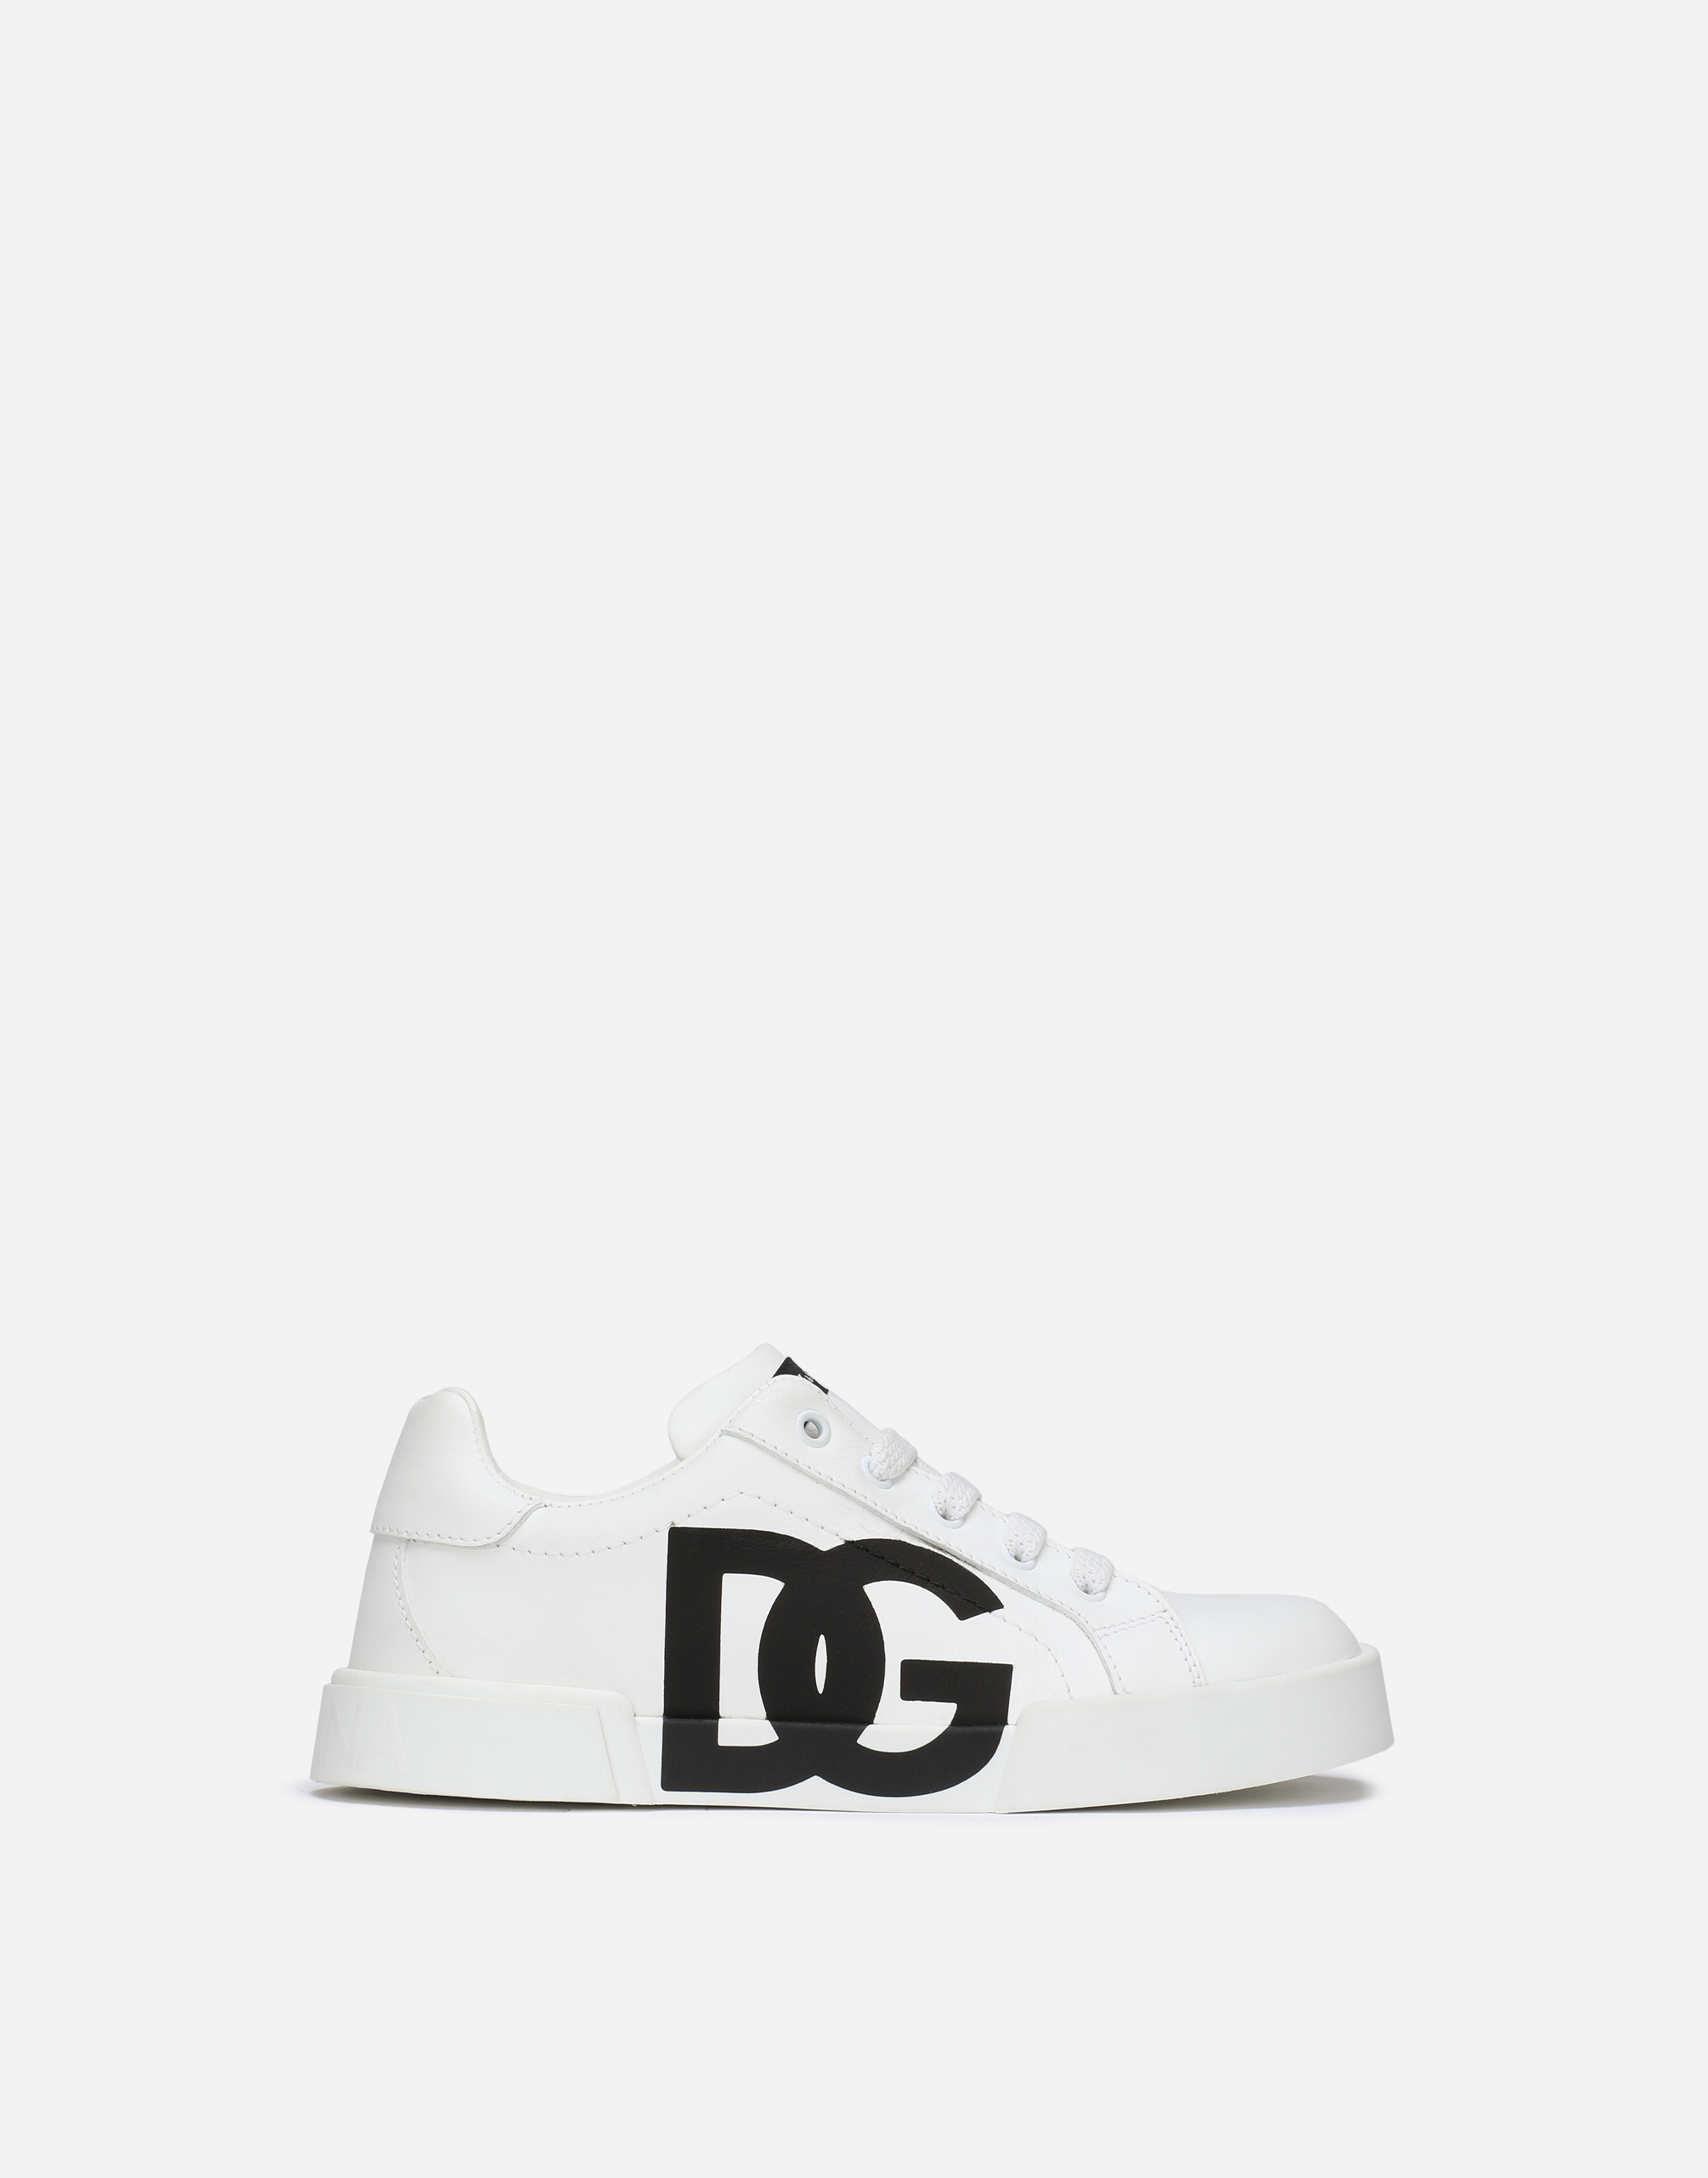 Portofino Light sneakers with DG logo in White